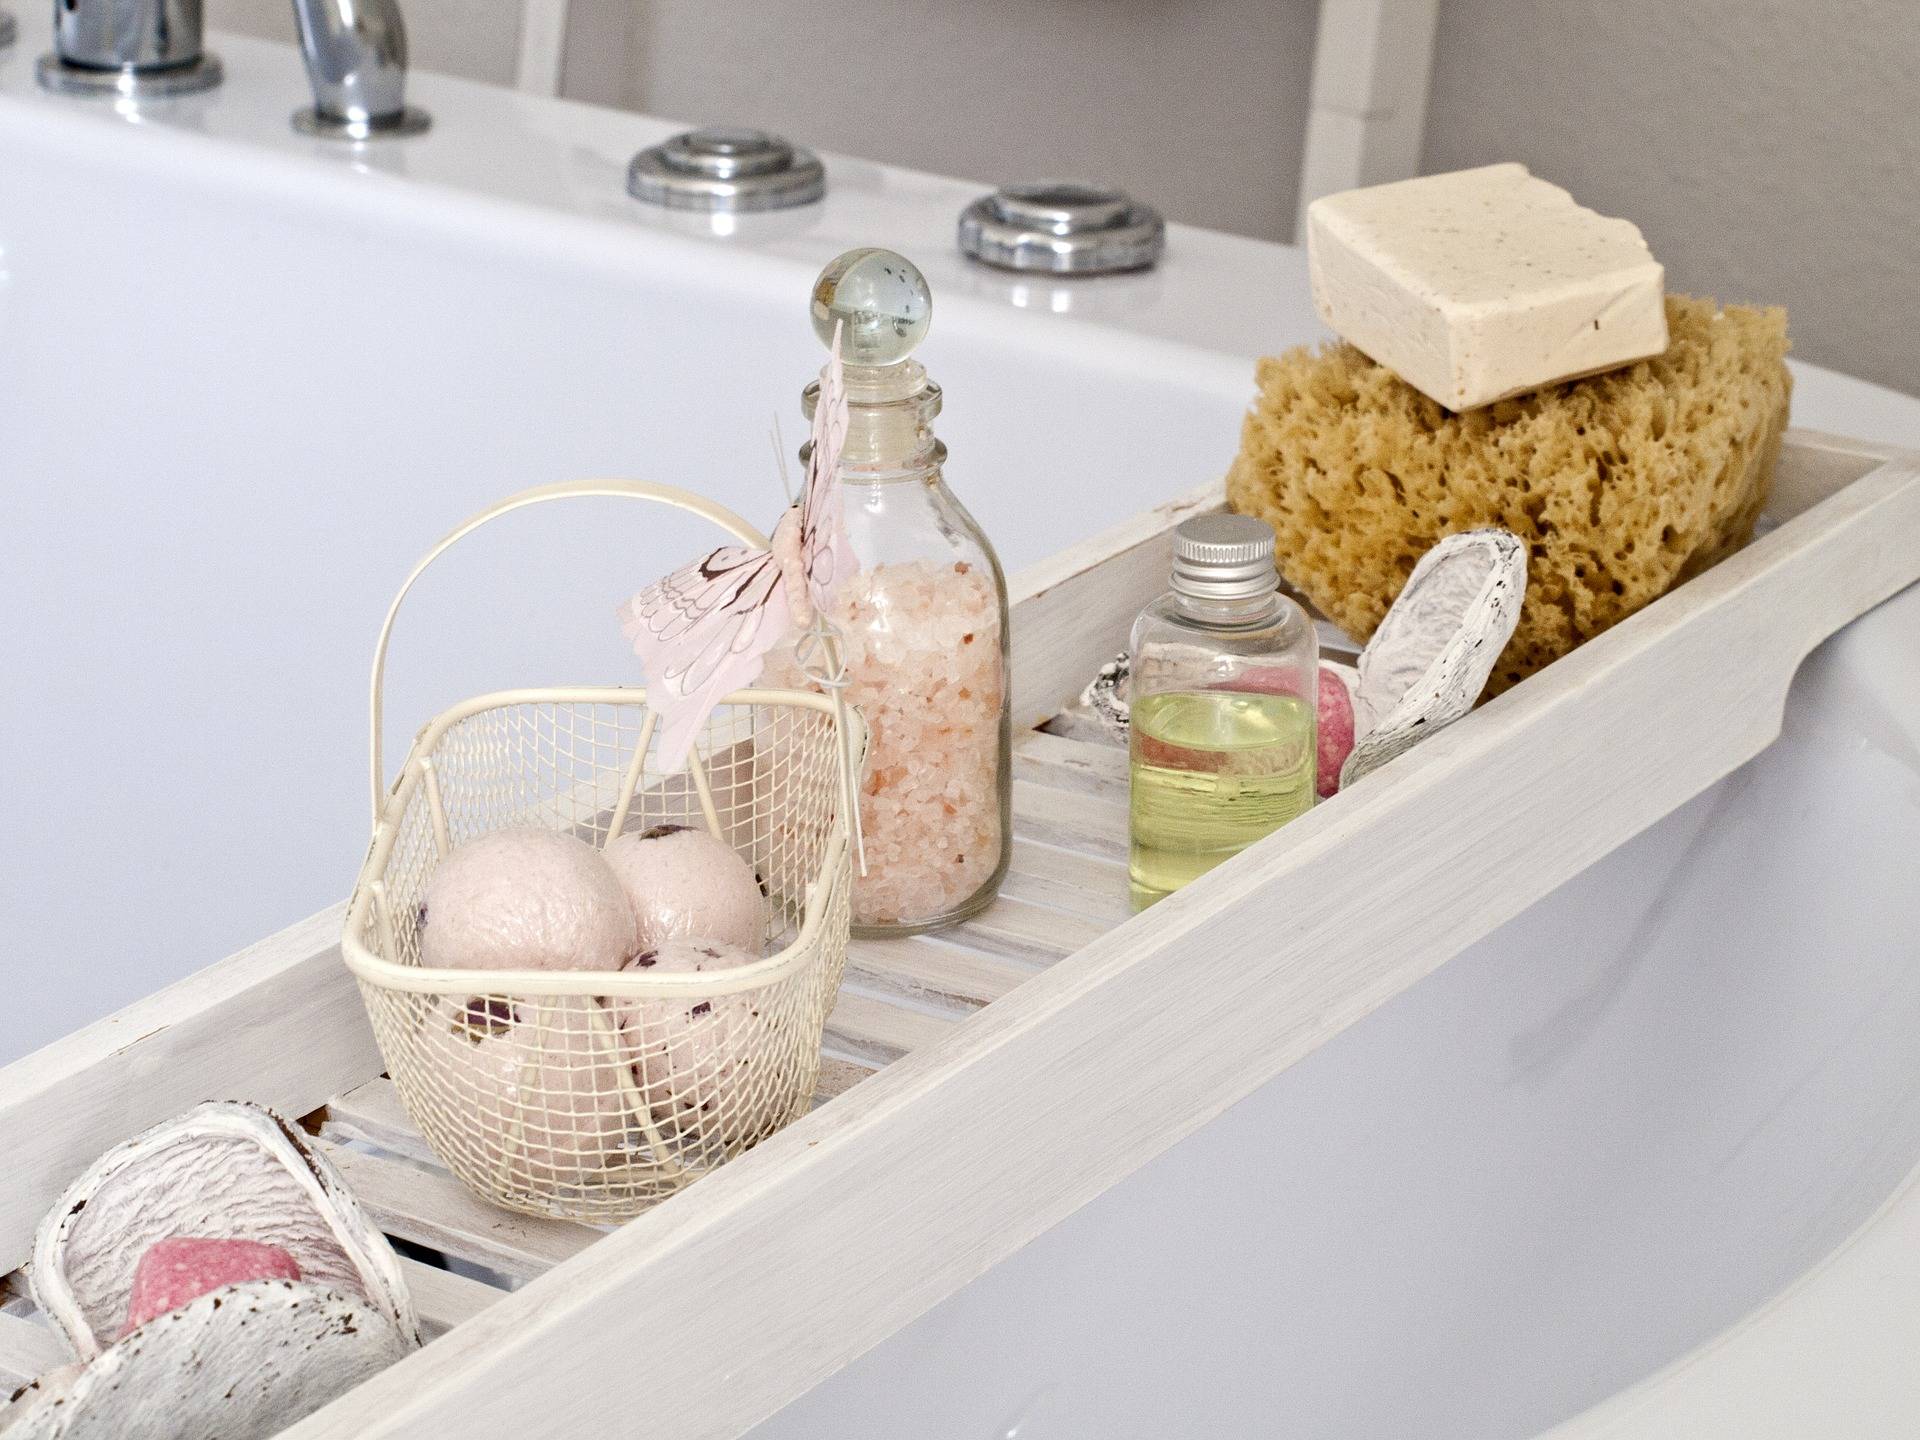 Bubble bath products